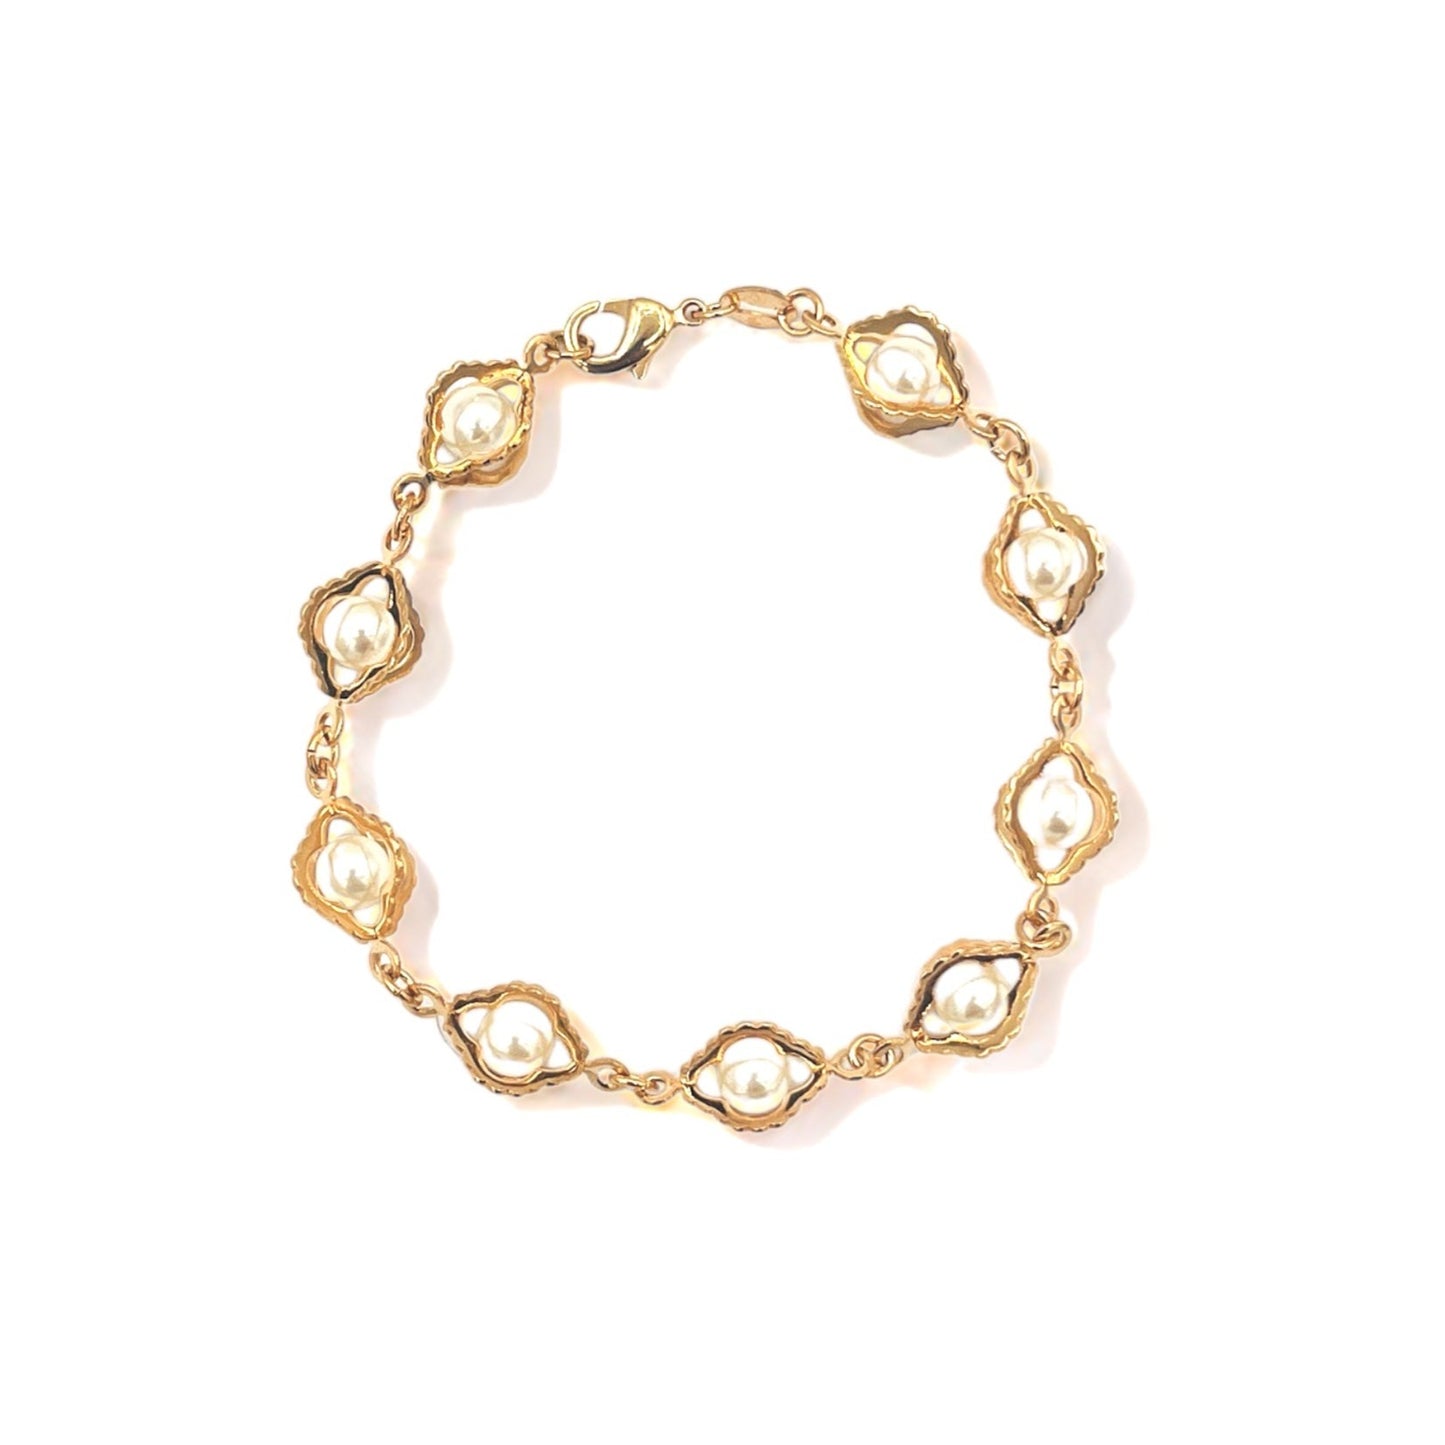 Linked Pearls Bracelet